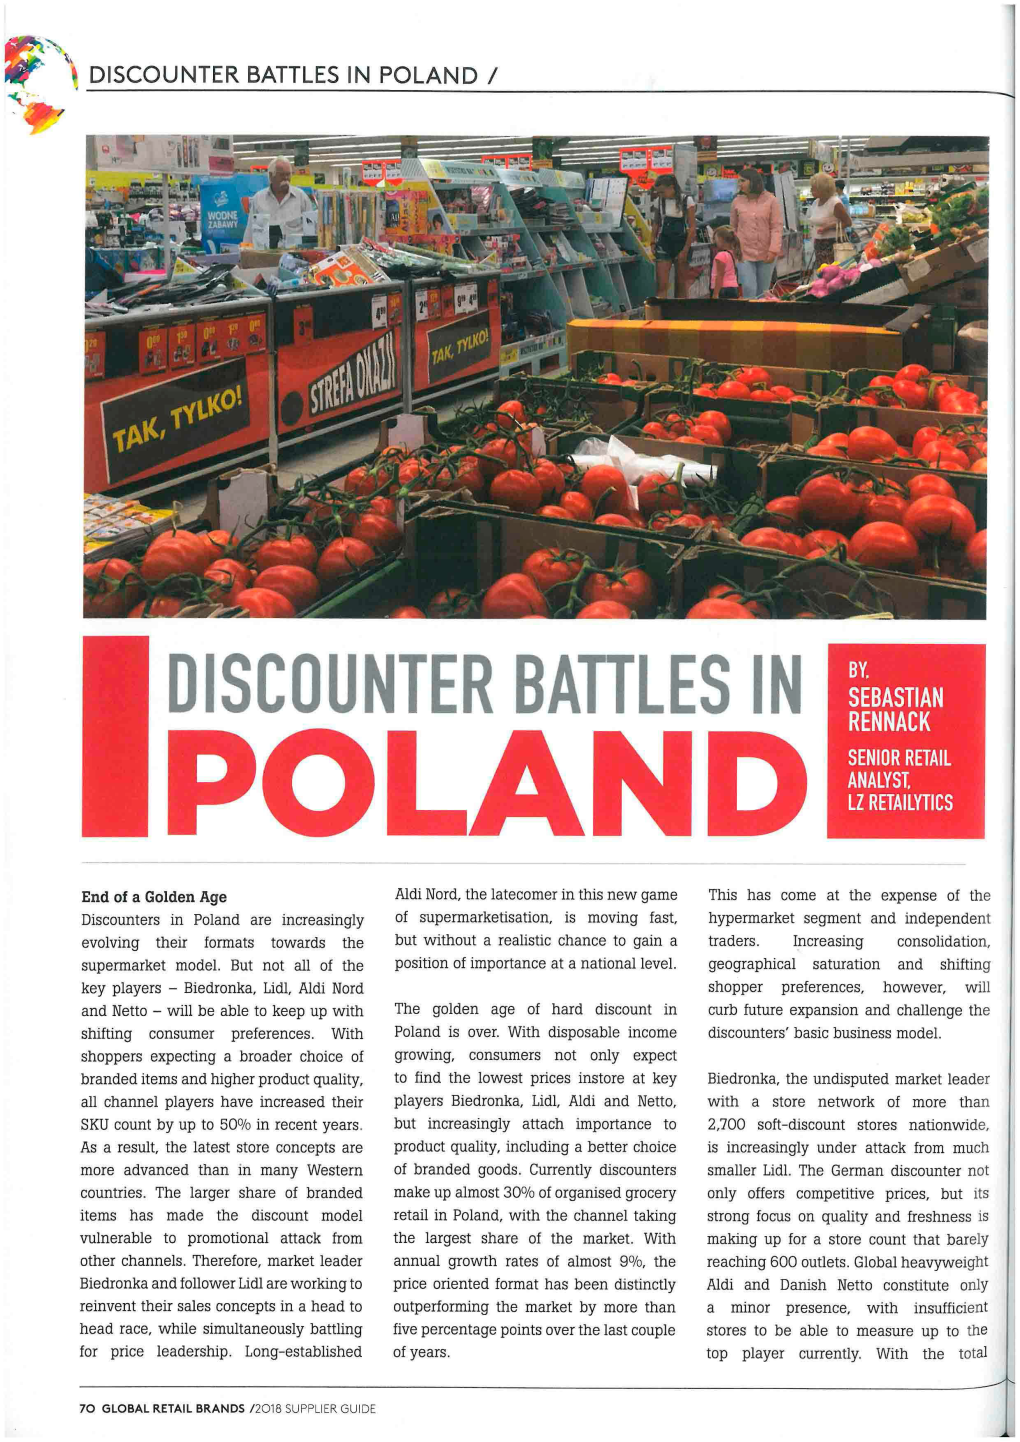 Discounter Battles in Poland